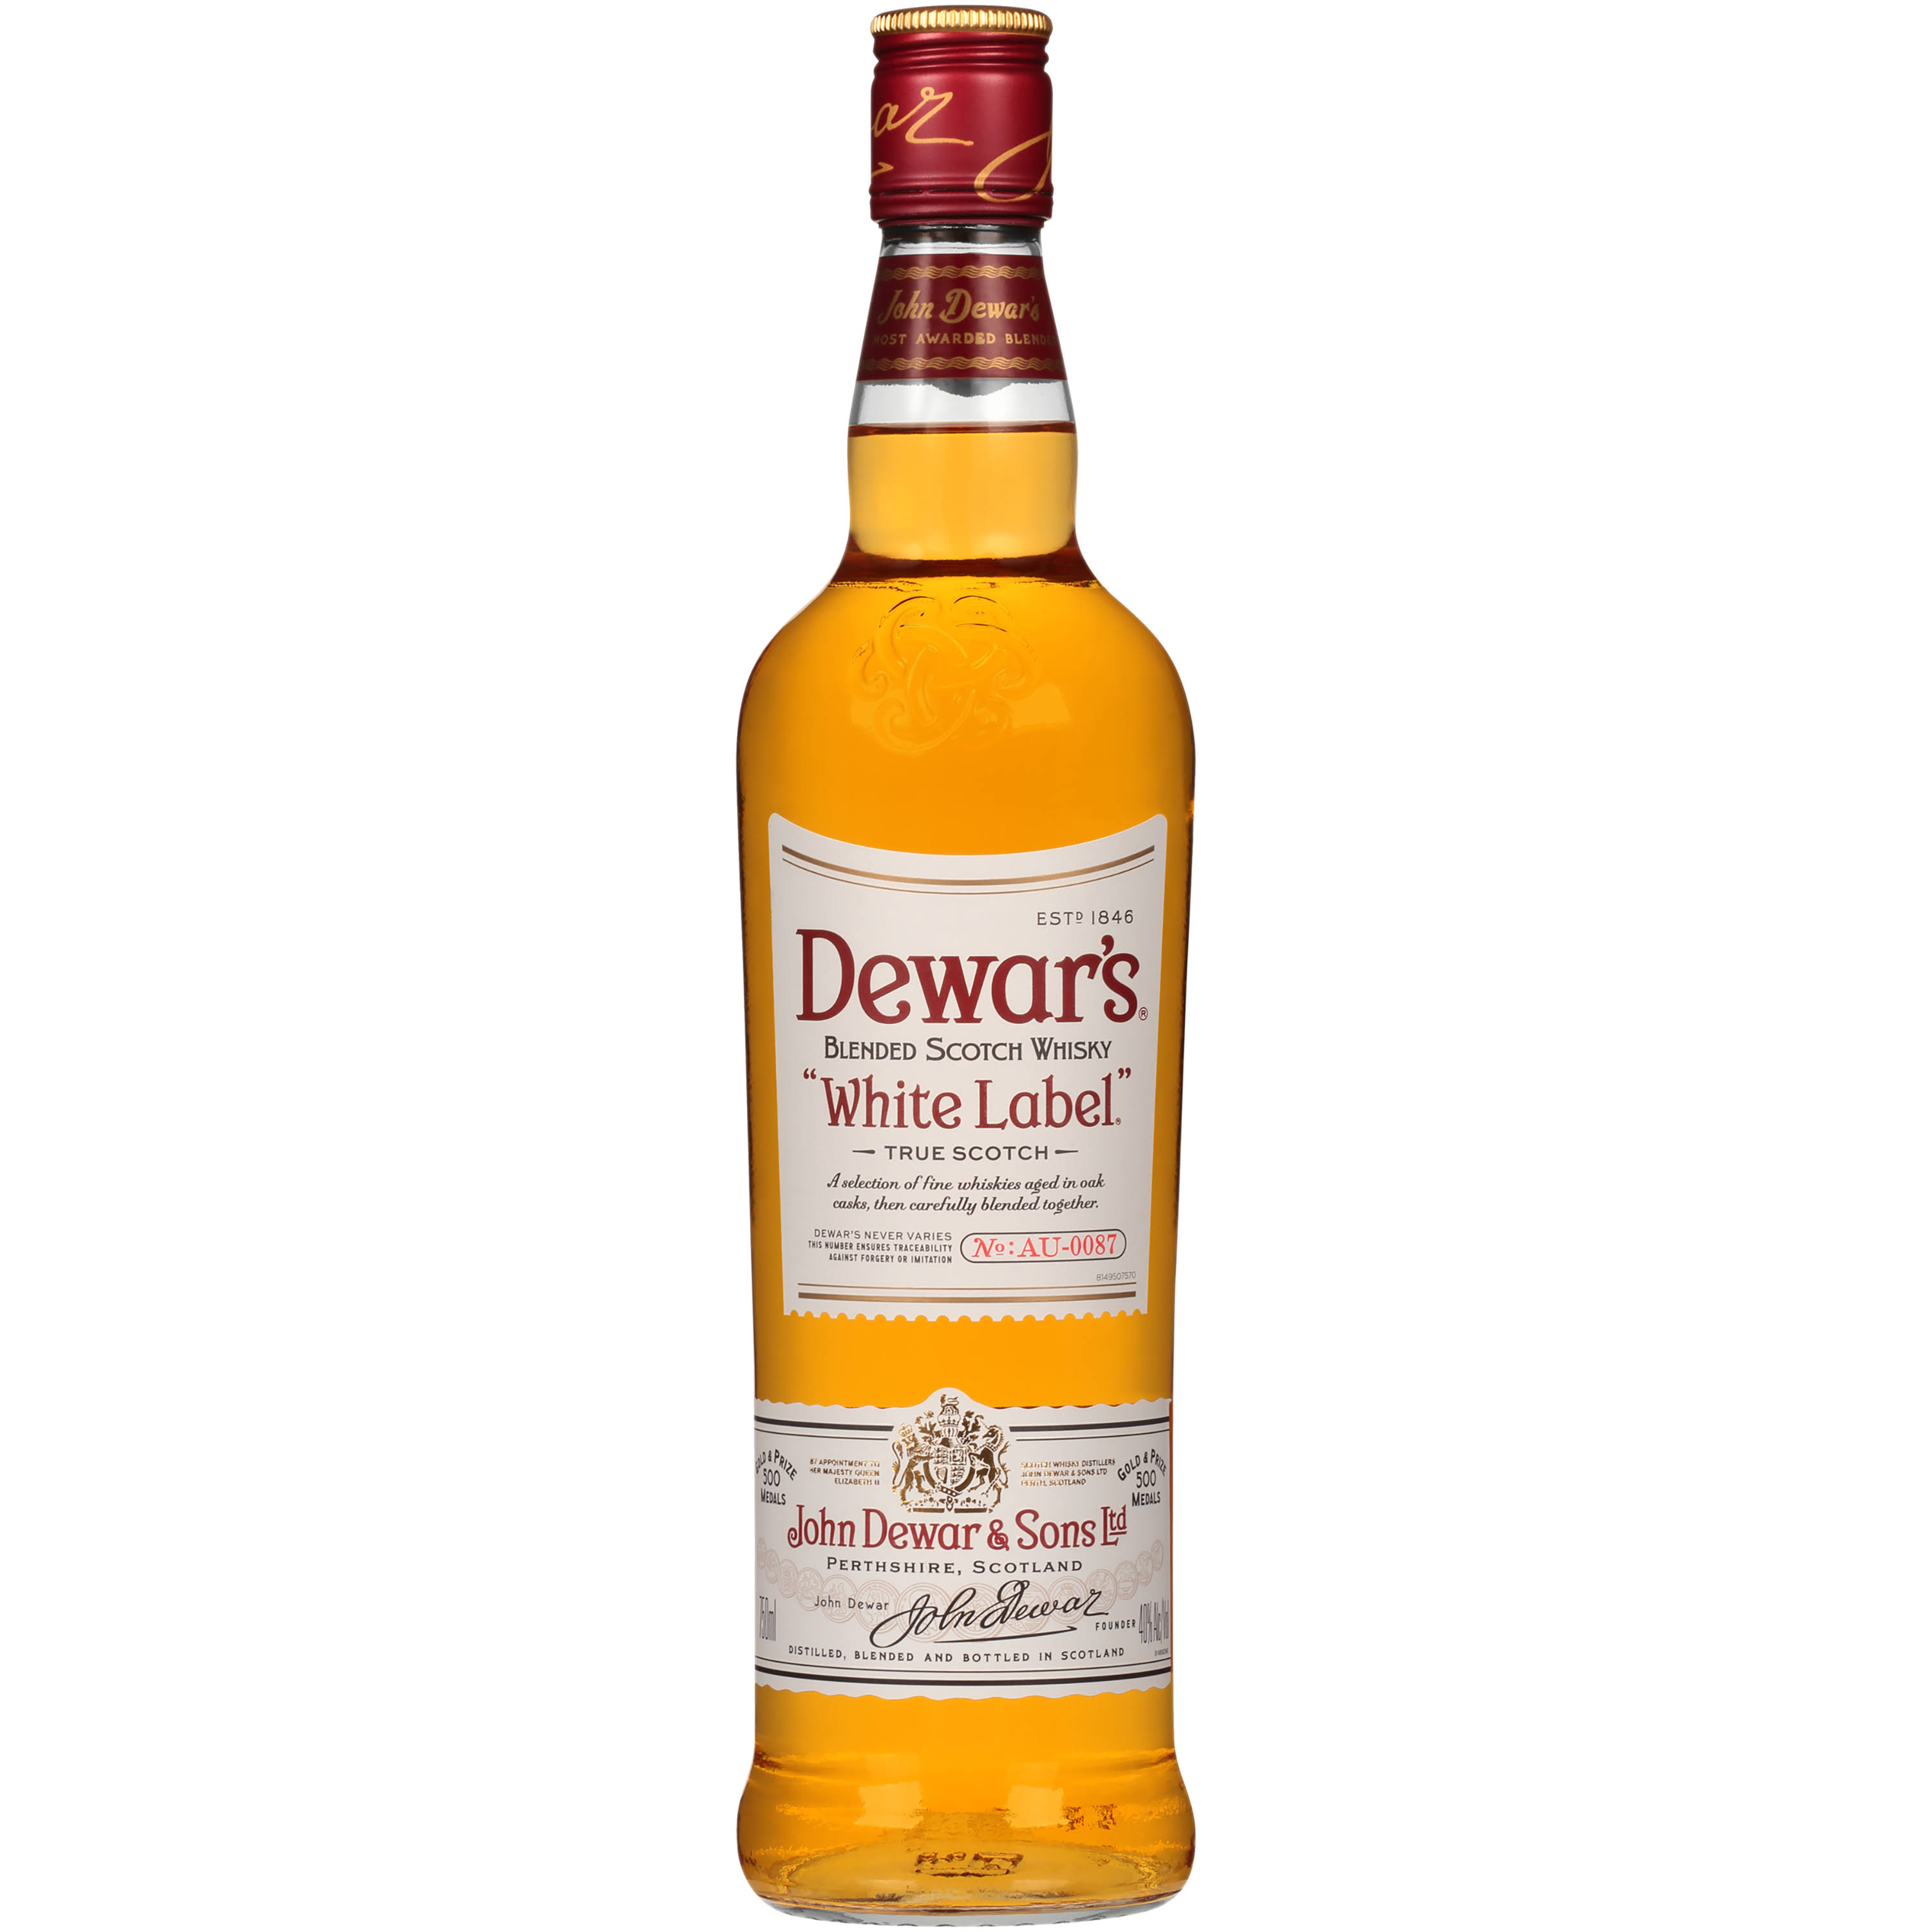 Dewars White Label Whisky, Scotch, Blended - 750 ml